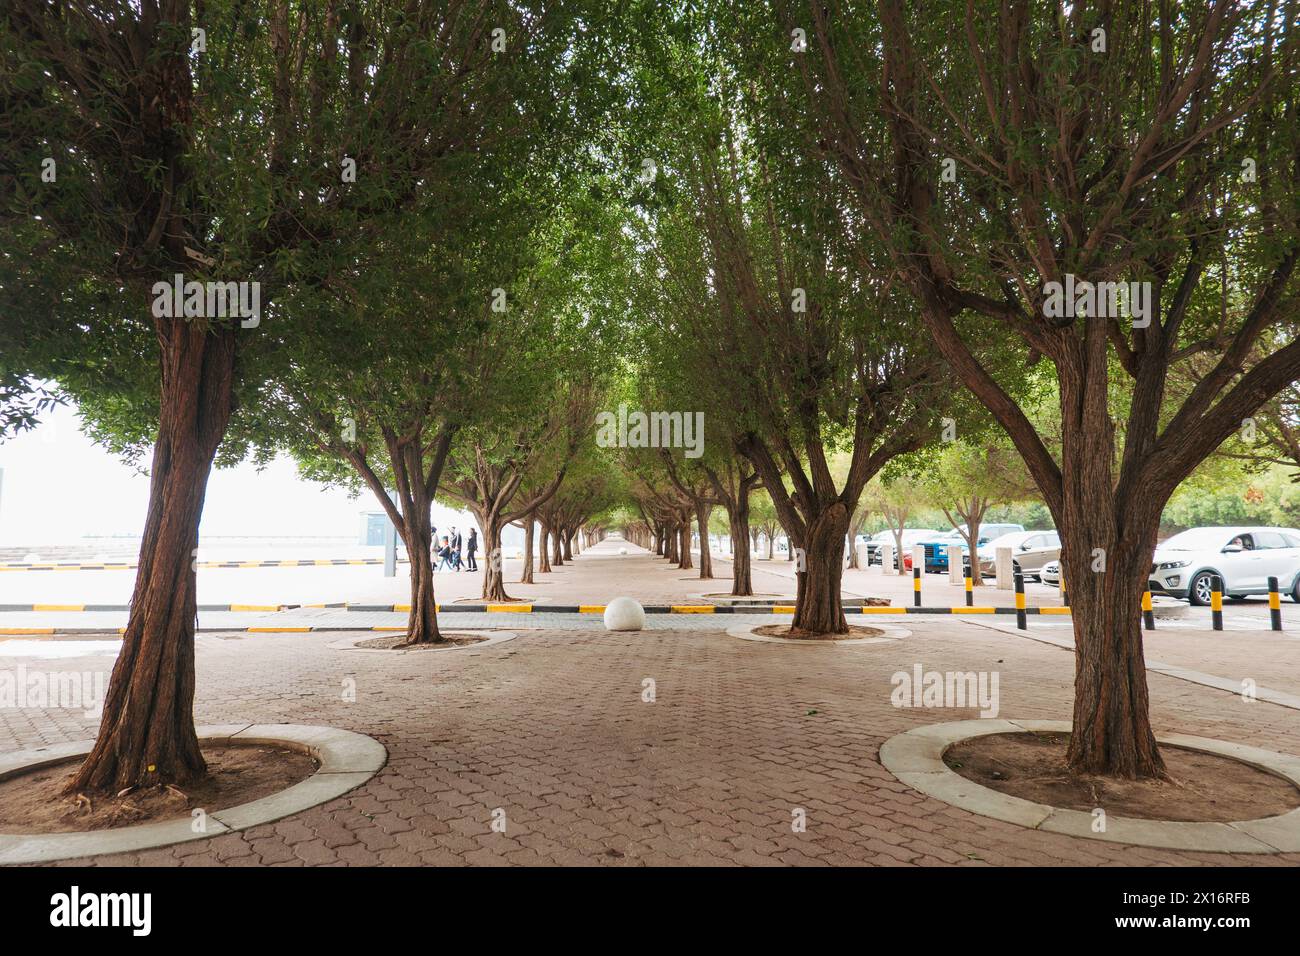 an avenue of trees give shade cover lining a pedestrian path along Dasman Beach, Kuwait Stock Photo